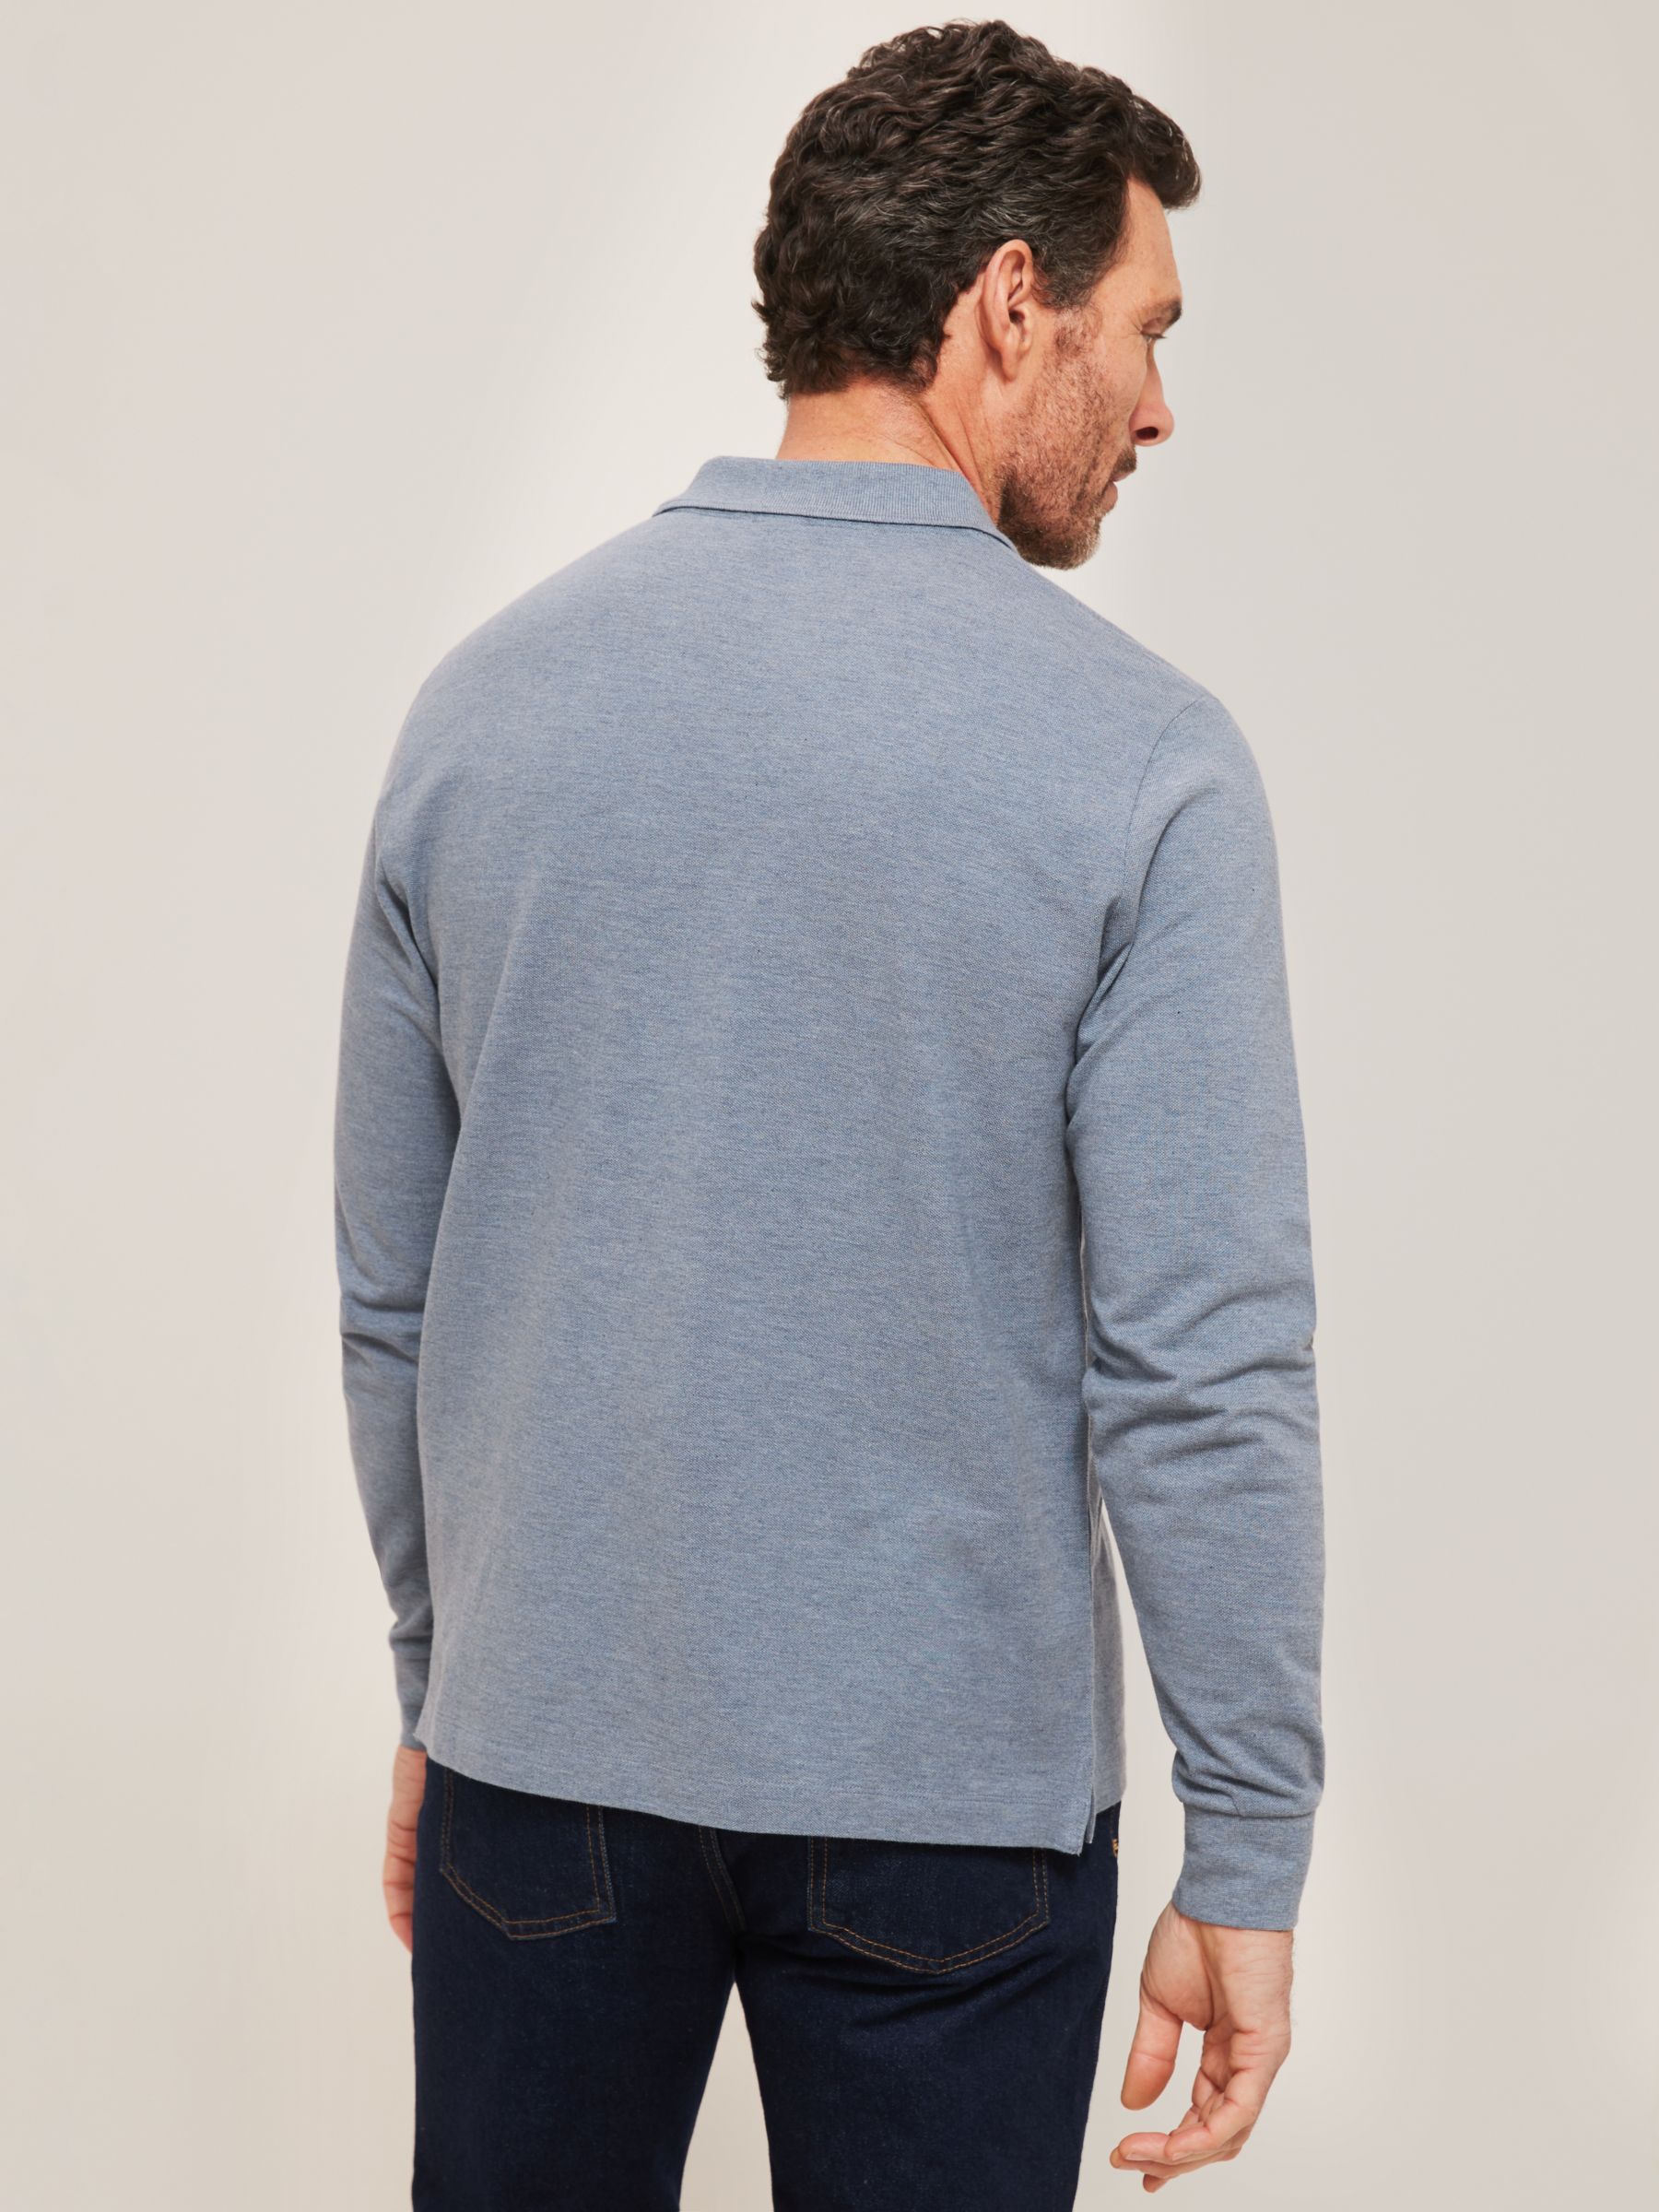 John Lewis Supima Cotton Long Sleeve Jersey Polo Shirt, Denim Melange, L